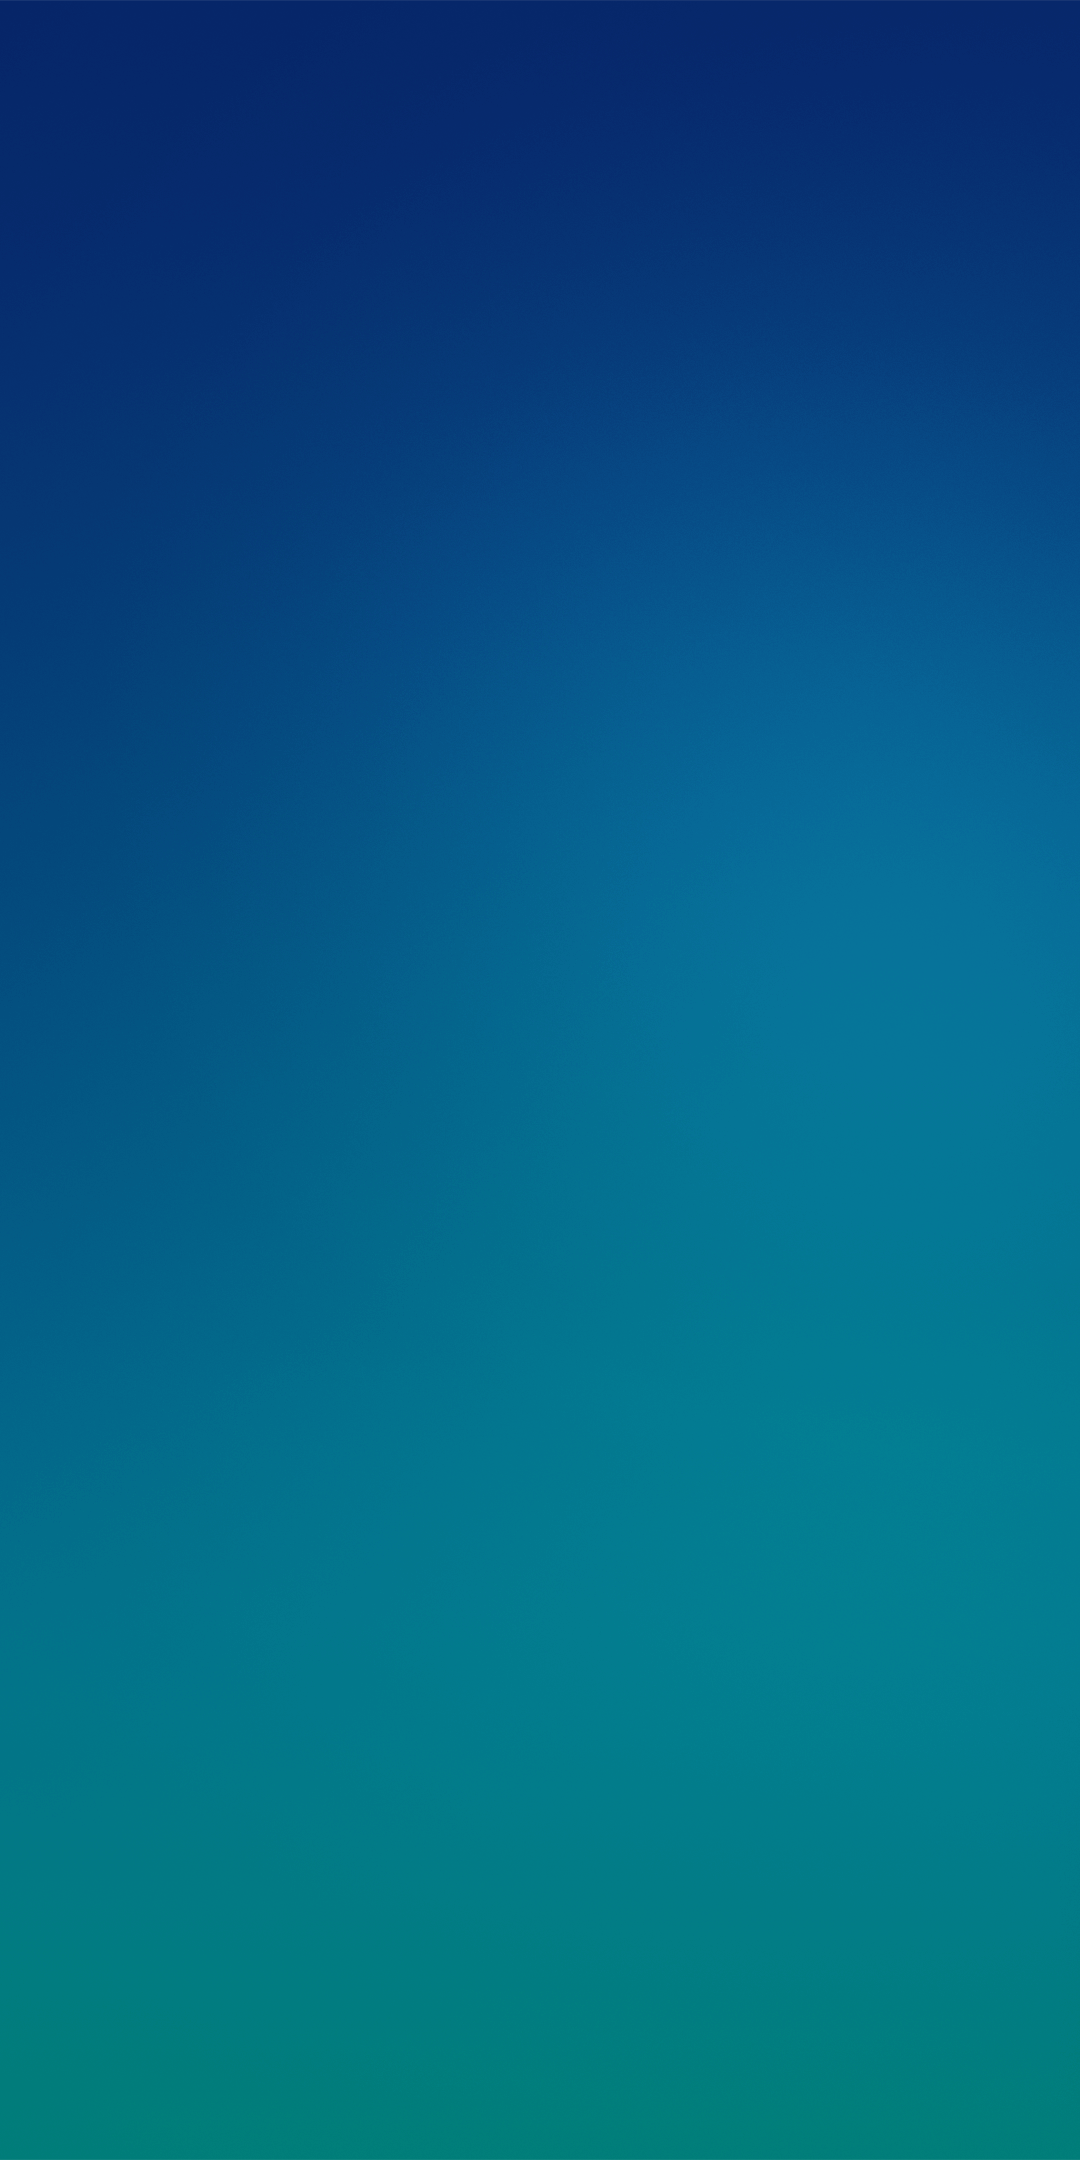 lenovo phone wallpaper,blue,green,aqua,daytime,sky